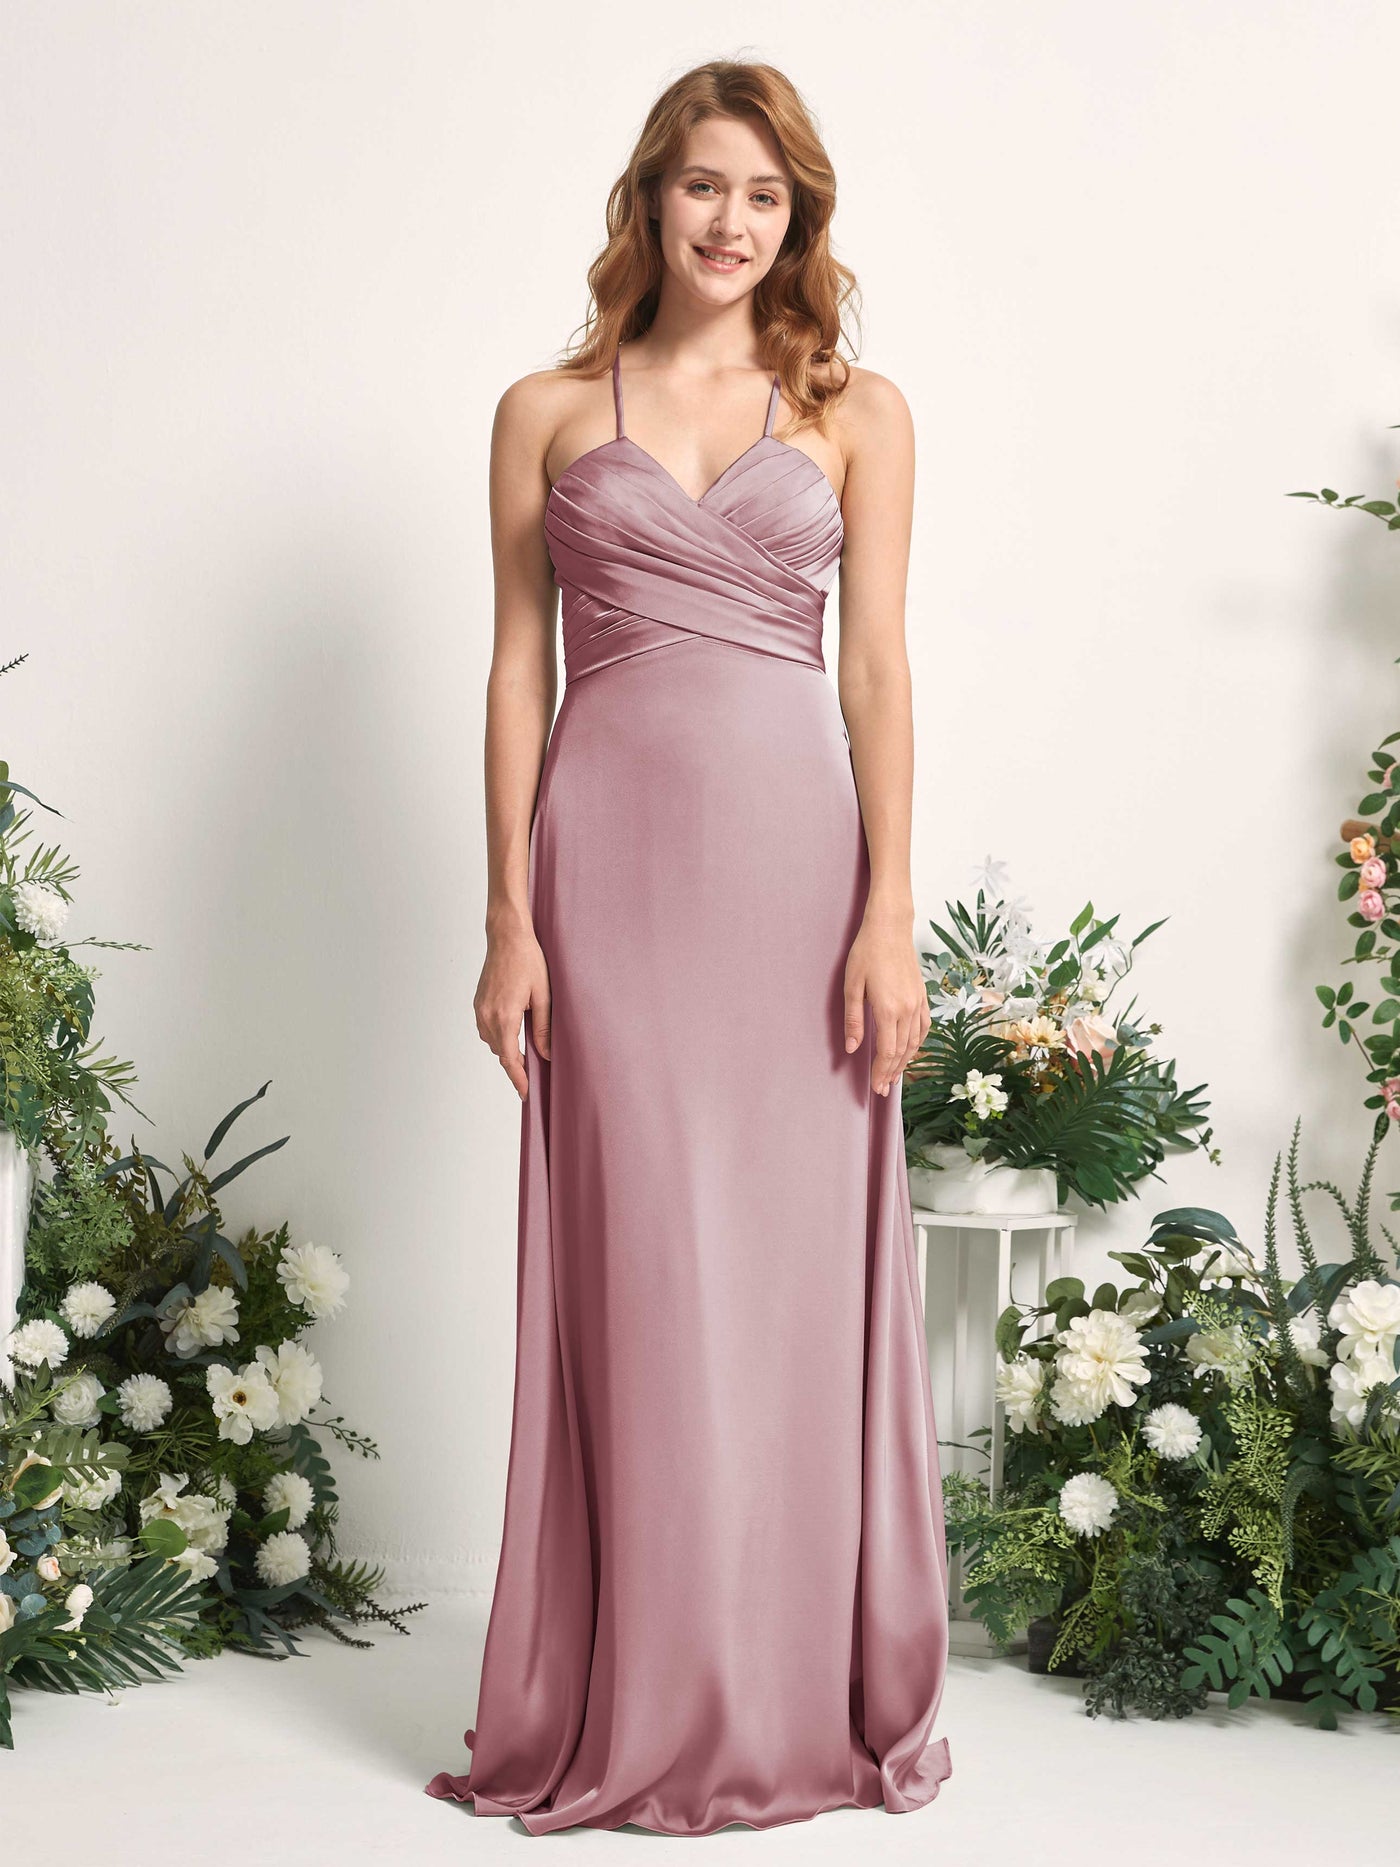 Rose Quartz Bridesmaid Dresses Bridesmaid Dress A-line Satin Spaghetti-straps Full Length Sleeveless Wedding Party Dress (80225766)#color_rose-quartz